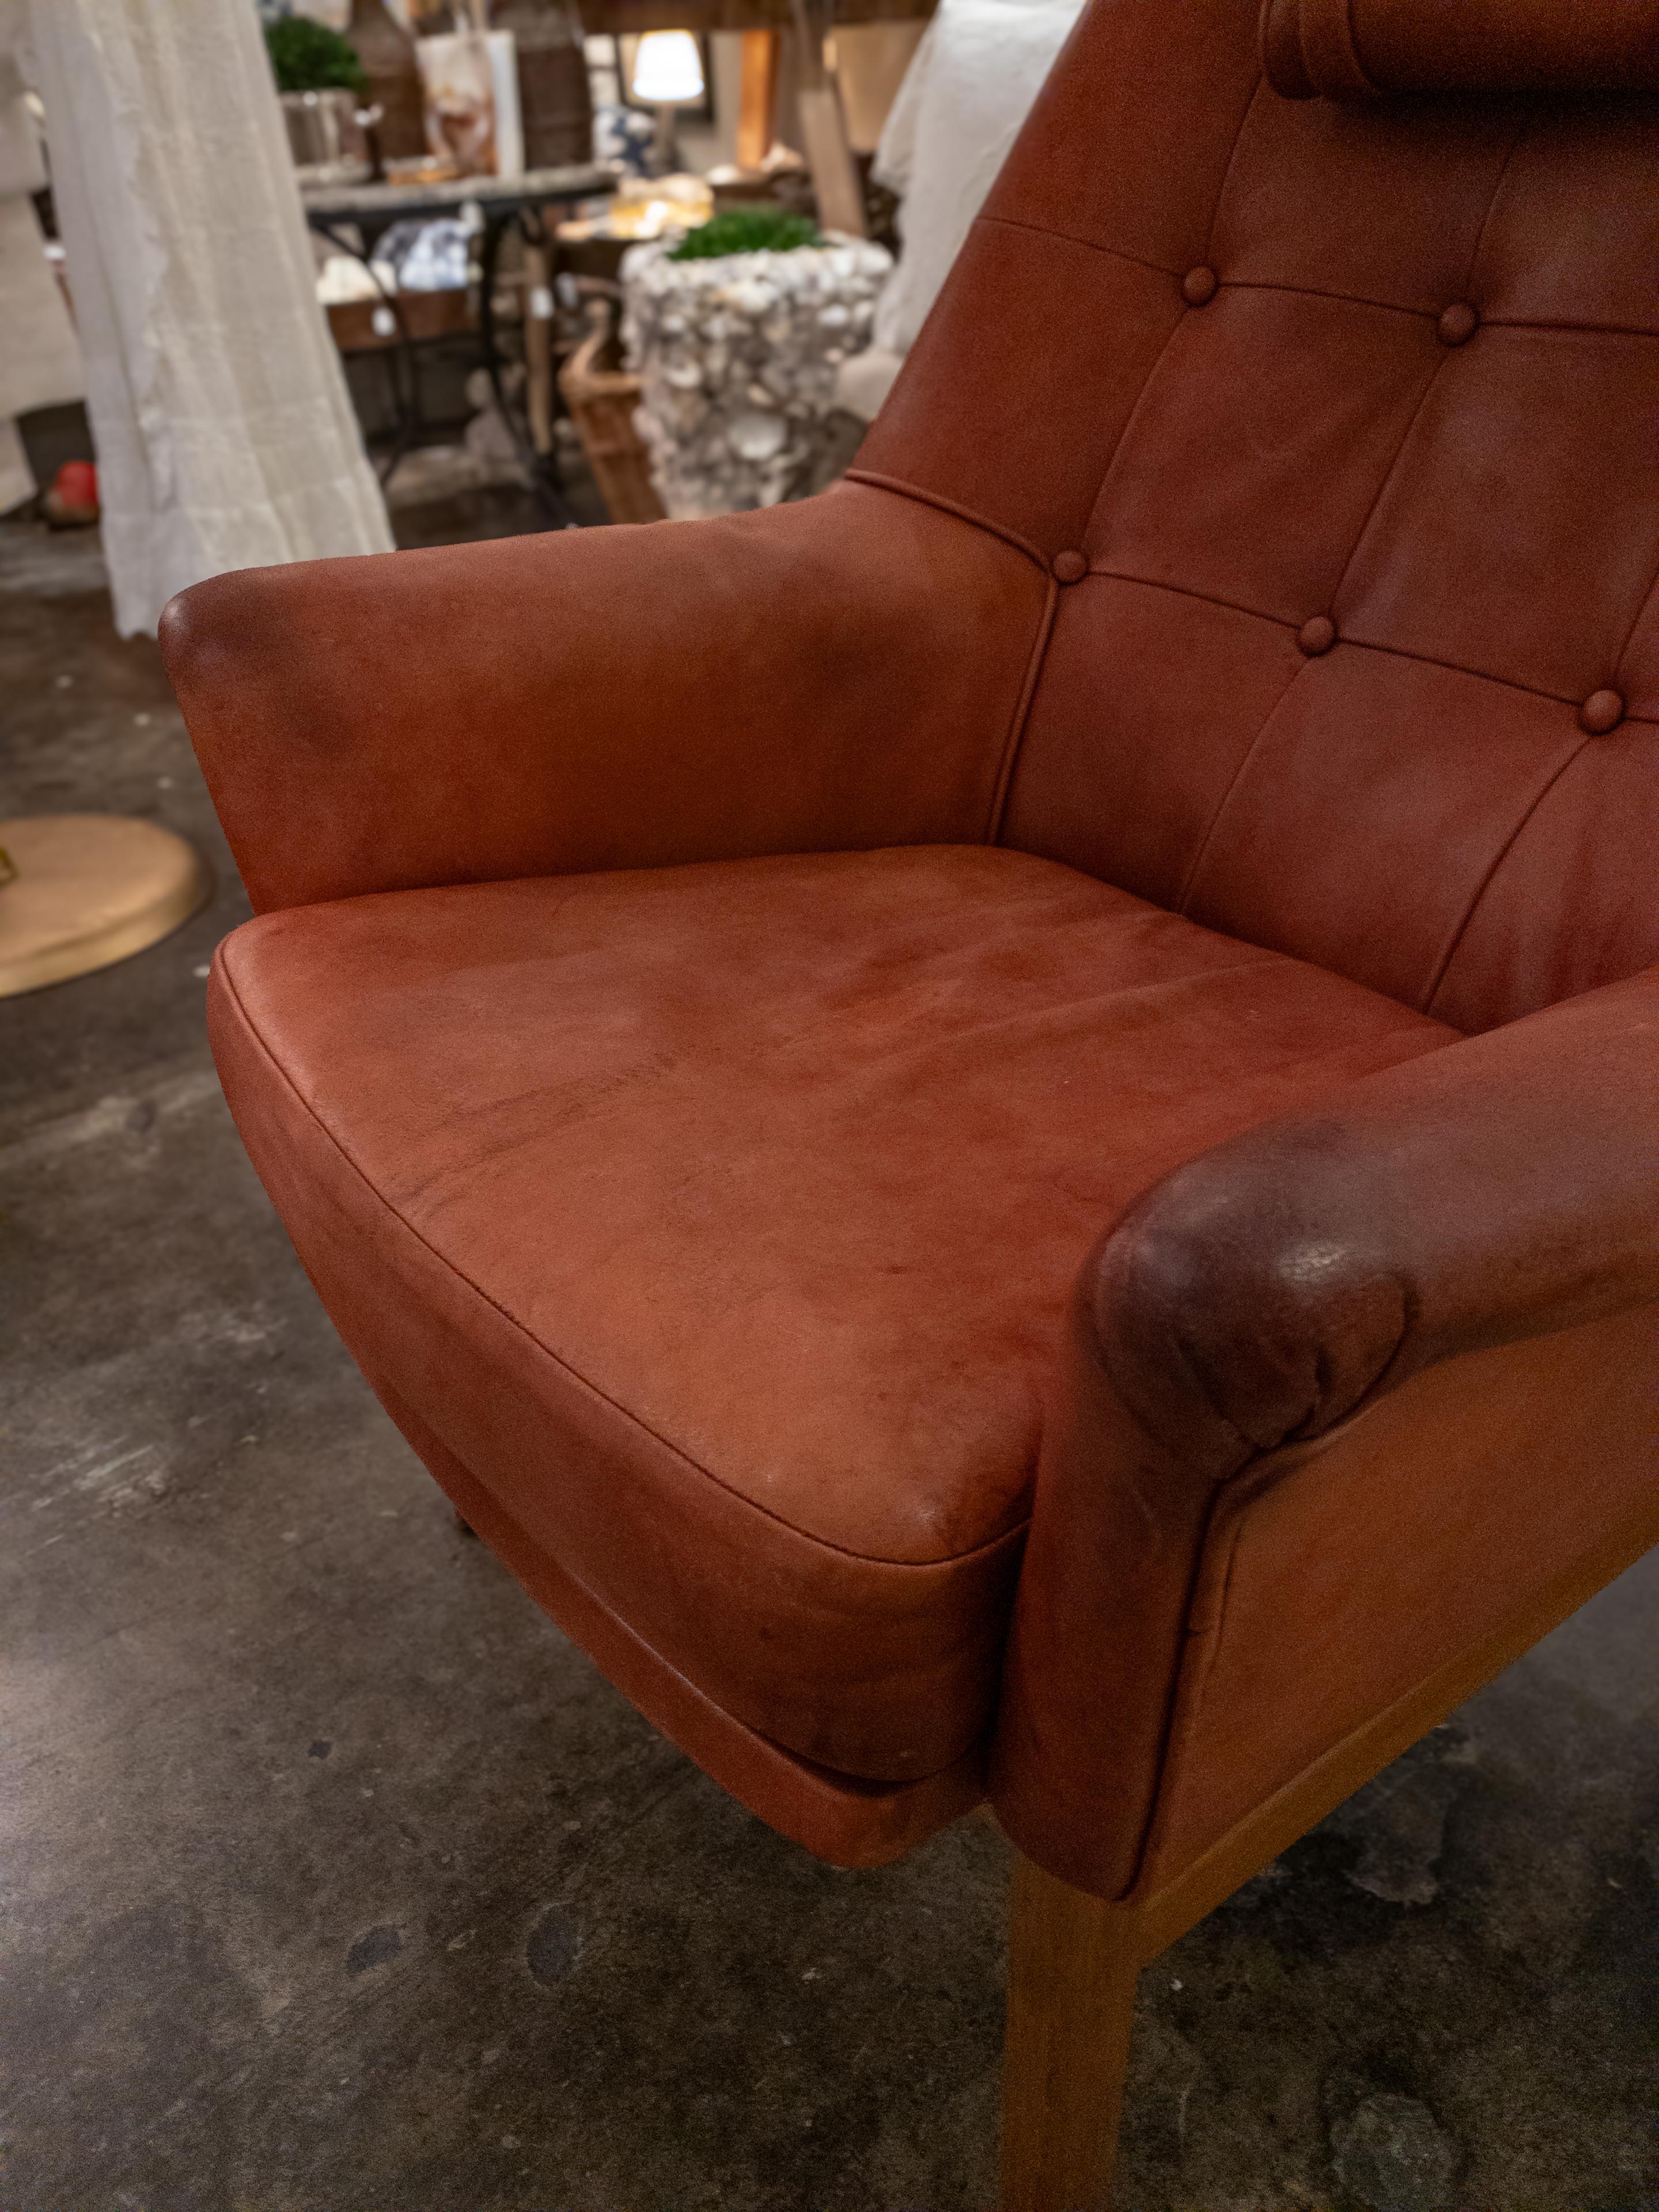 Tove & Edvard Kindt-Larsen Leather Lounge Chair For Sale 1